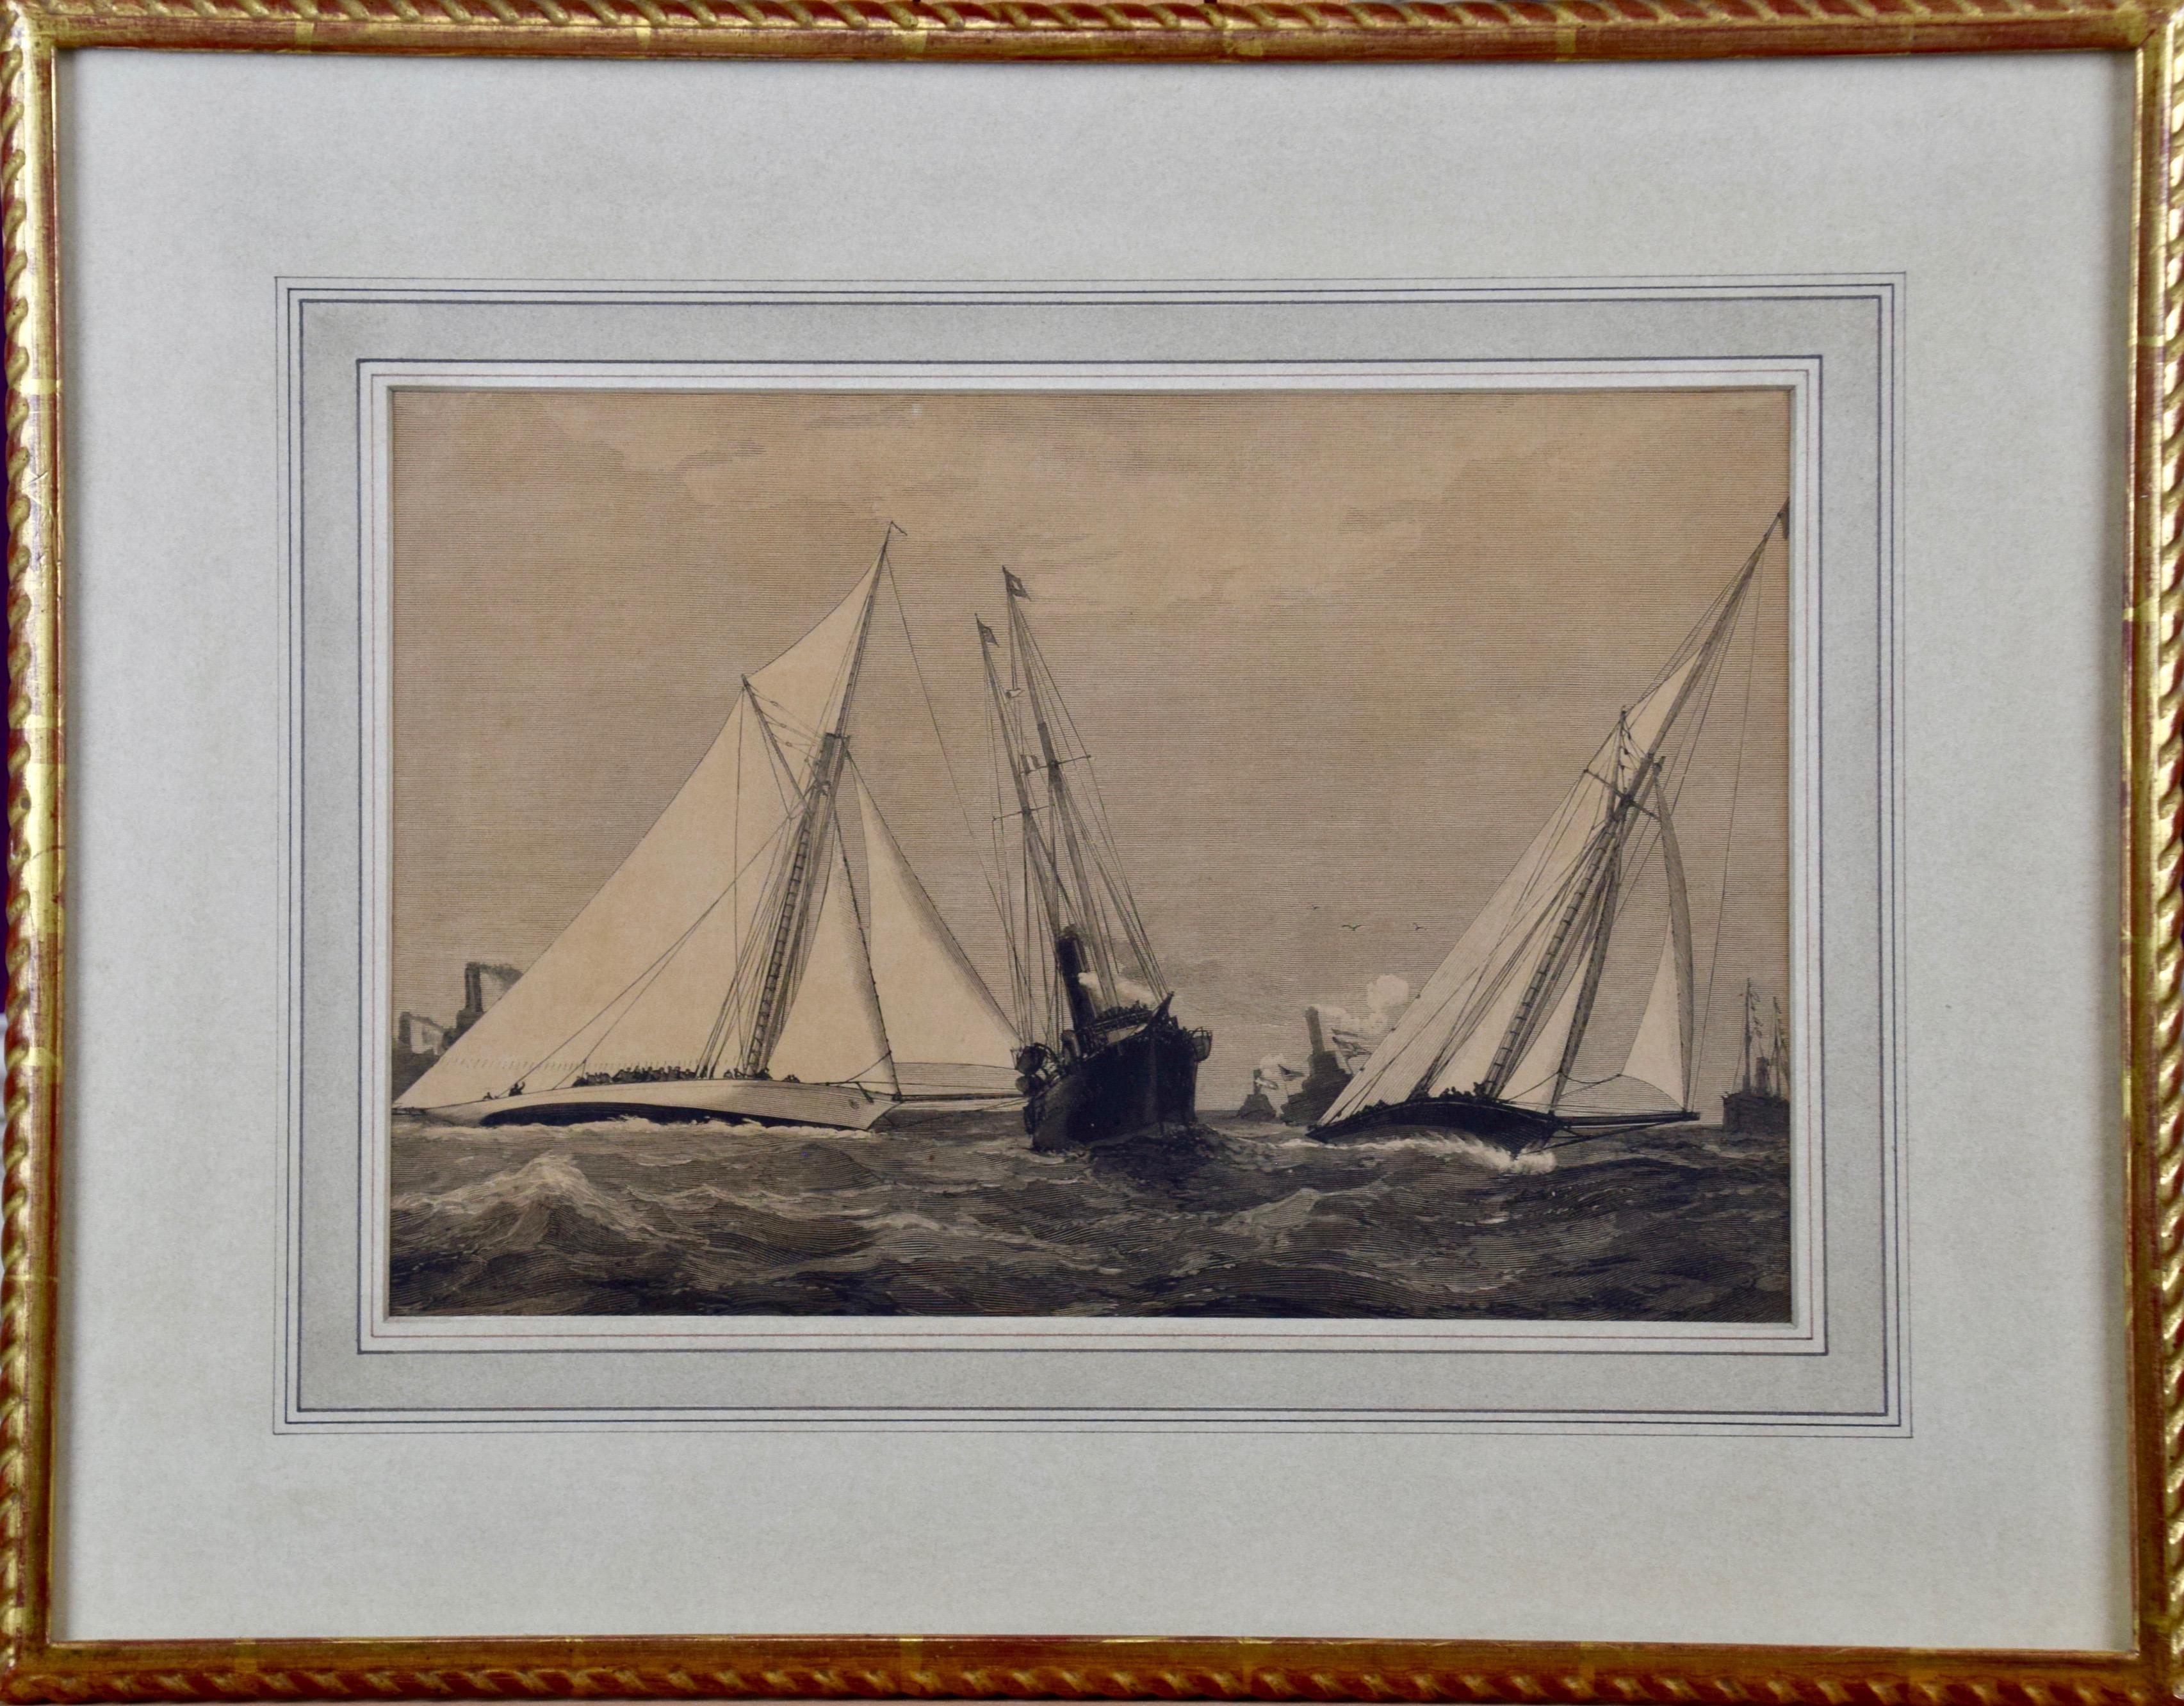 1885 America's Cup Sailing Yachts: Set of 3 Original 19th C. Engravings 1